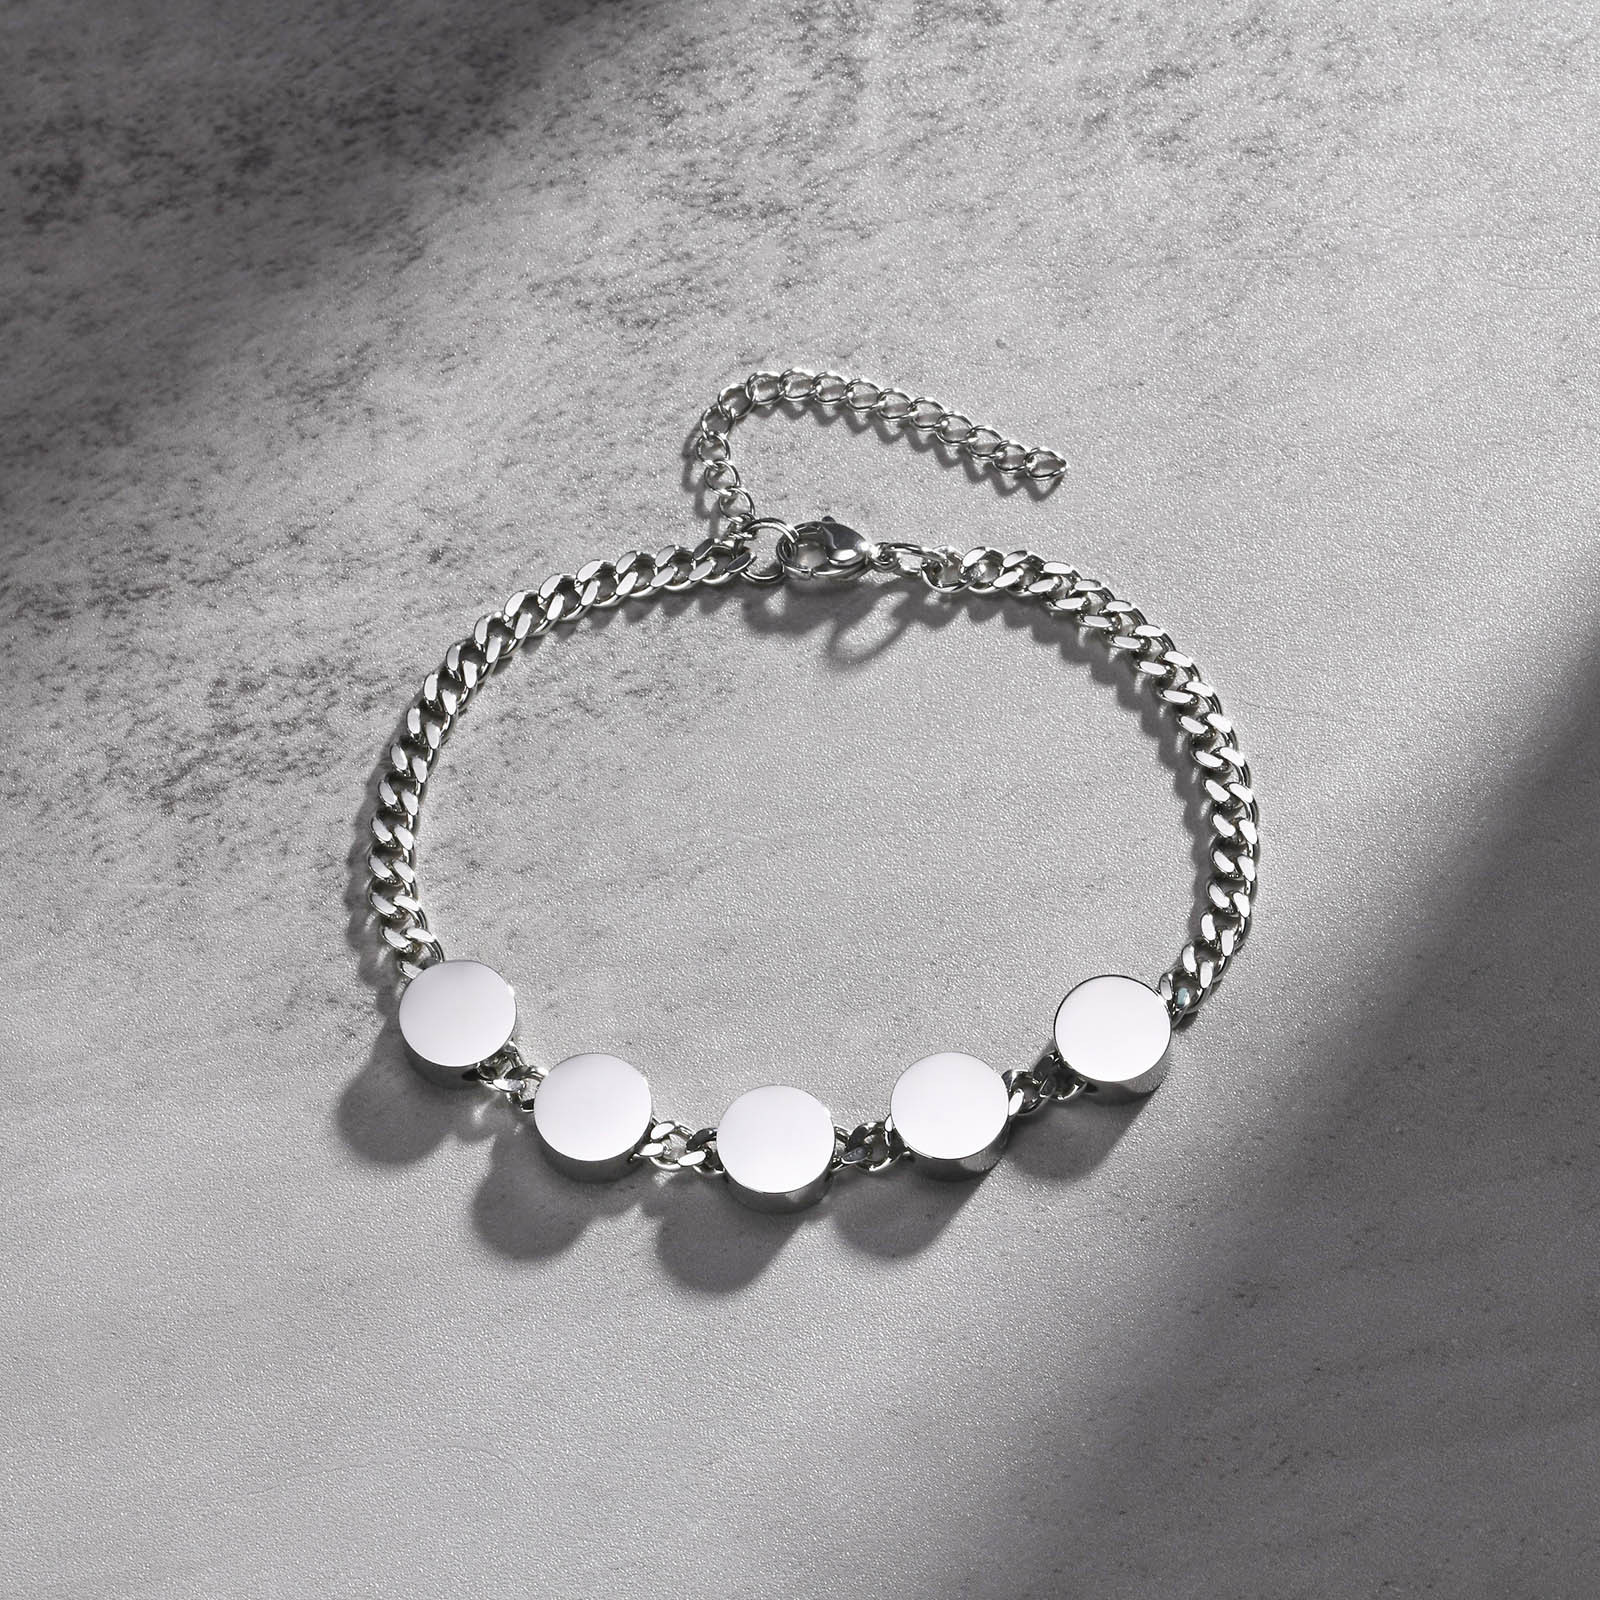 6:5 accessory [blank] bracelet